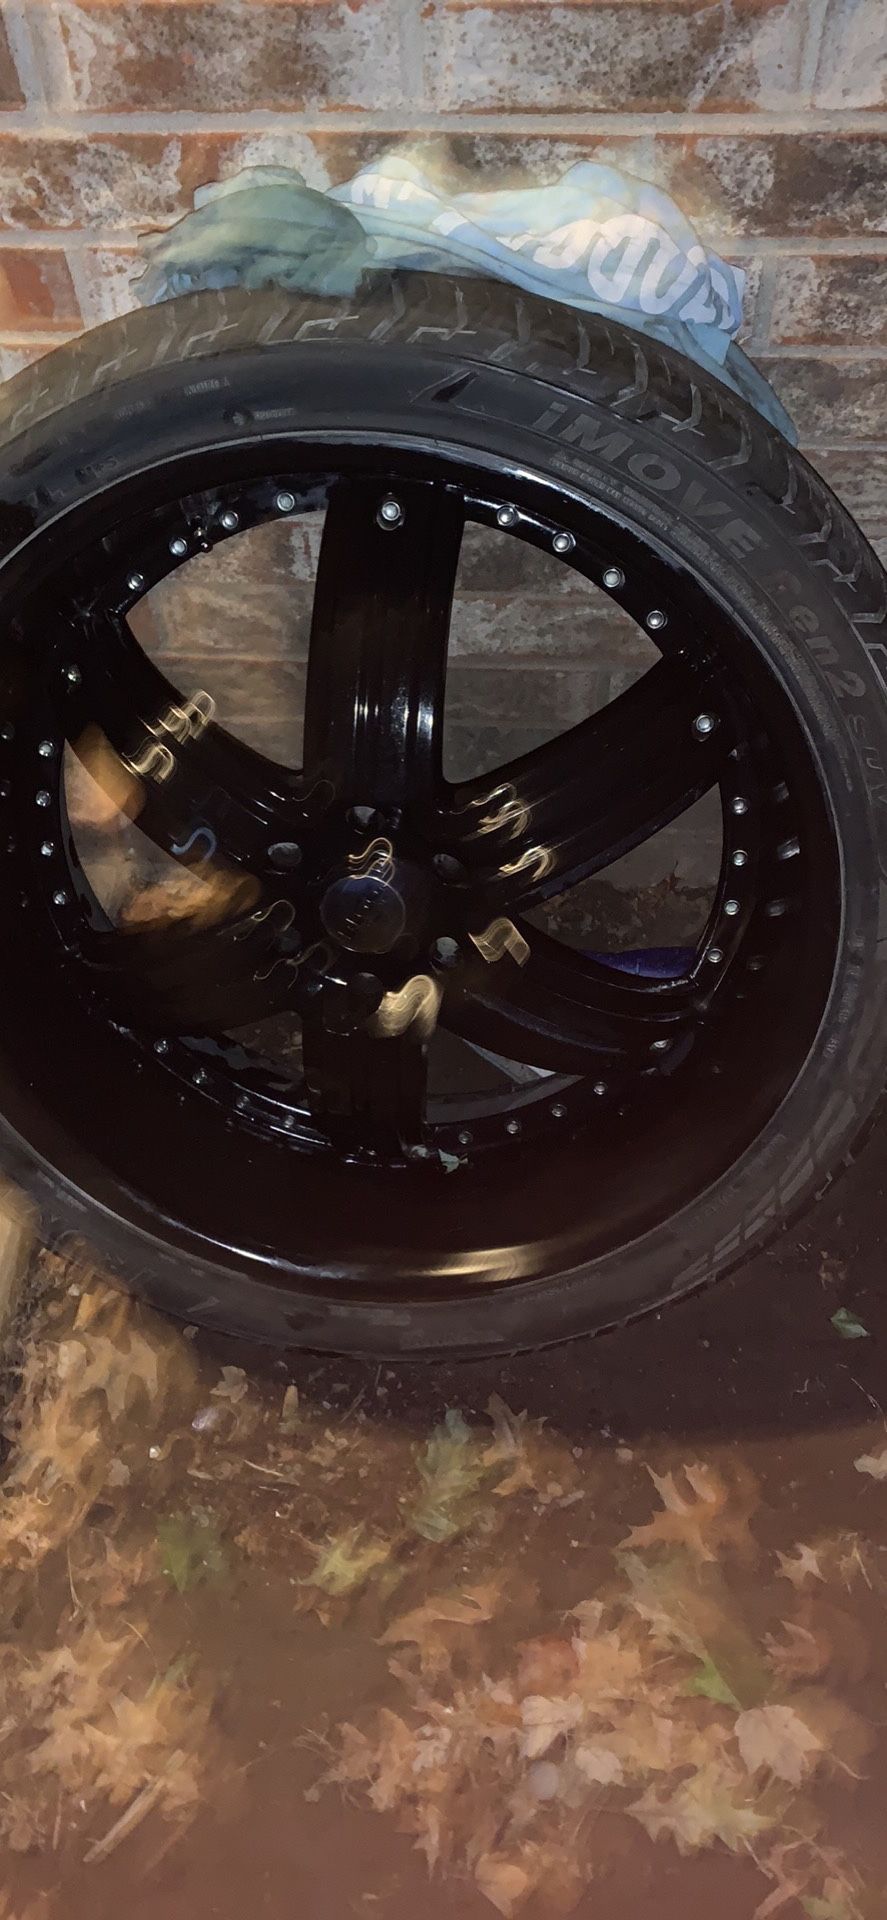 24 Inch Biggs Rims And Tires